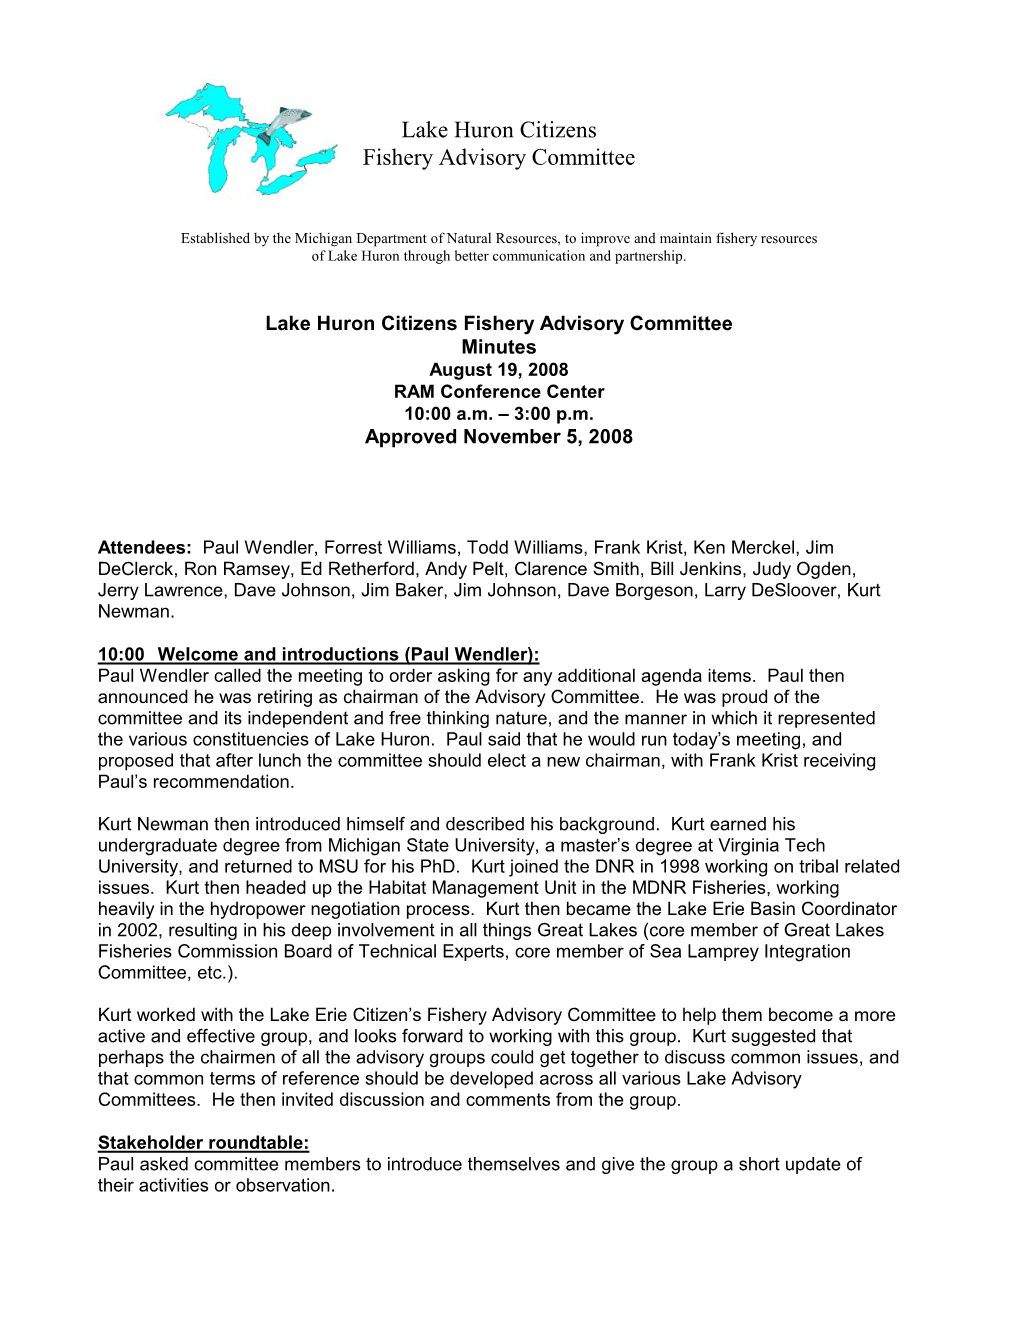 Lake Huron Citizens Fishery Advisory Committee Meeting Minutes